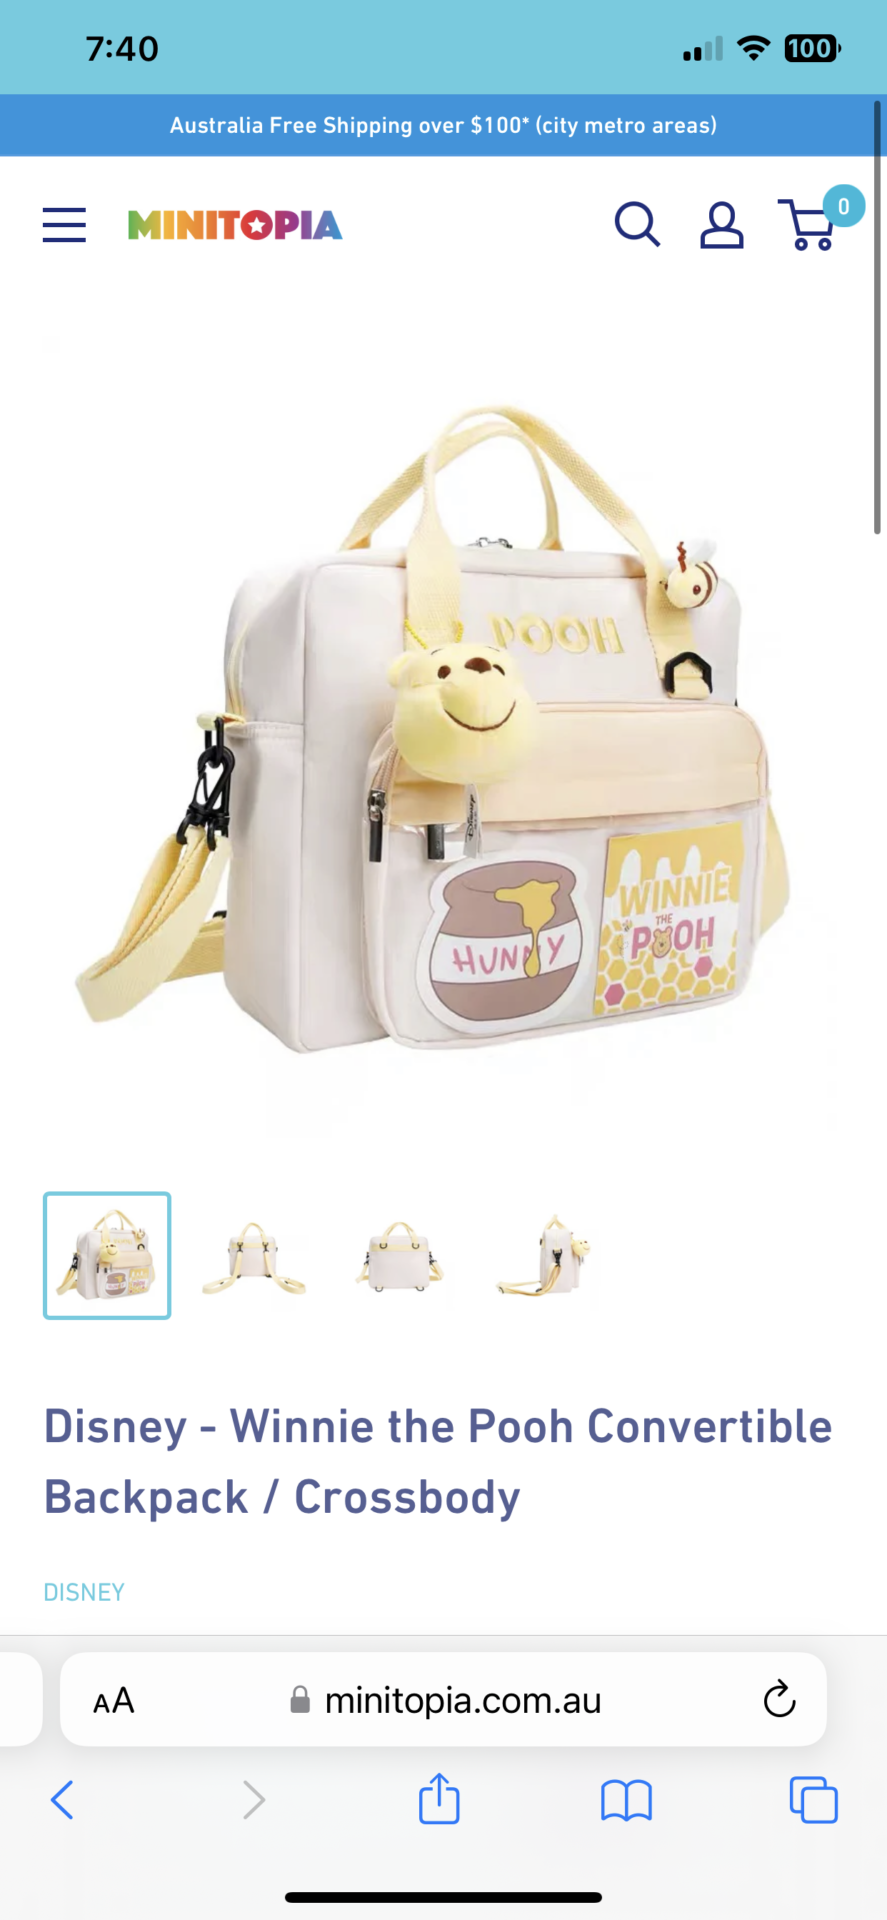 Disney - Winnie the Pooh Convertible Backpack / Crossbody